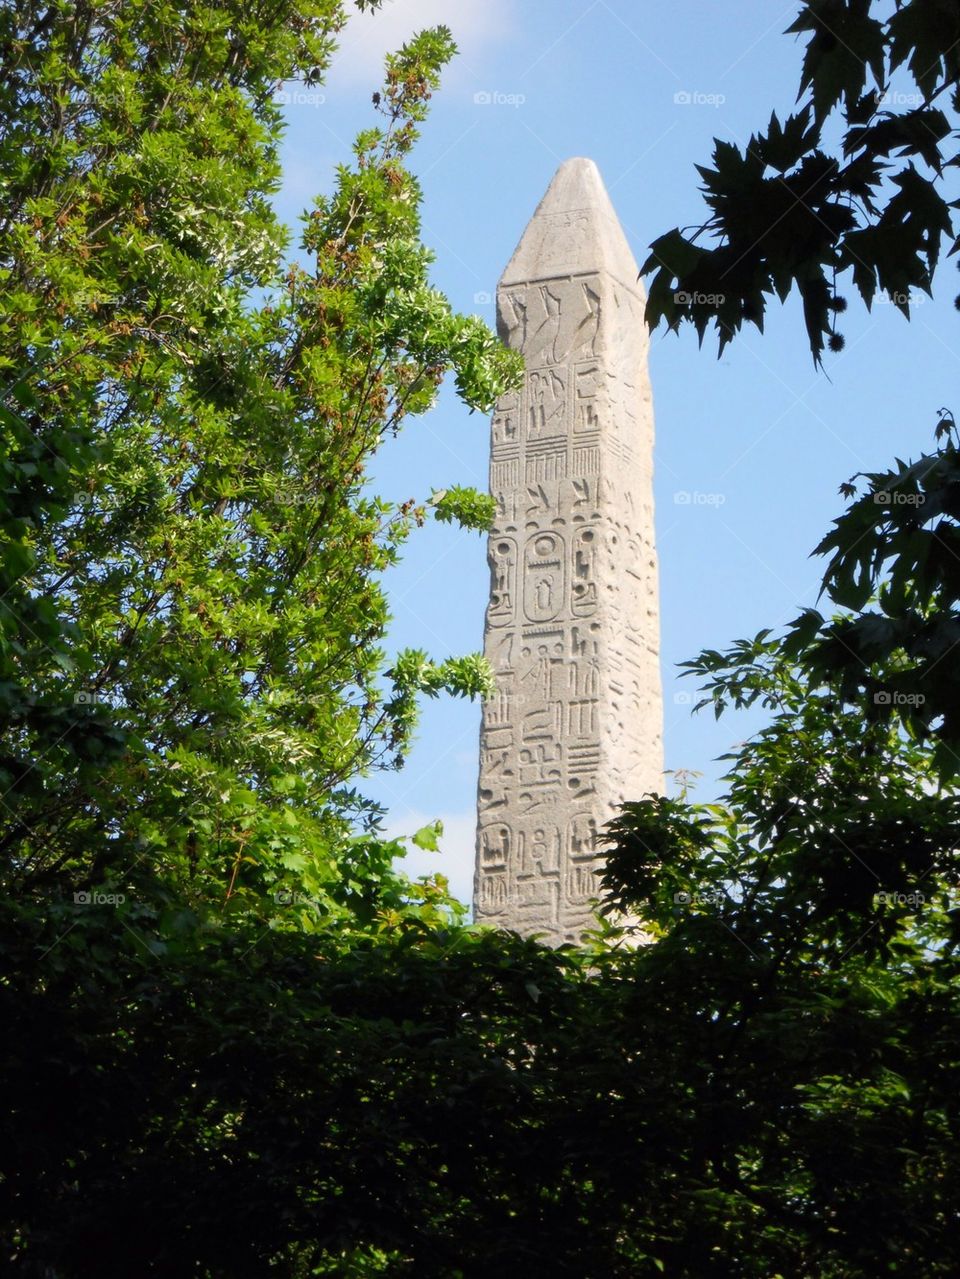 London obelisk 